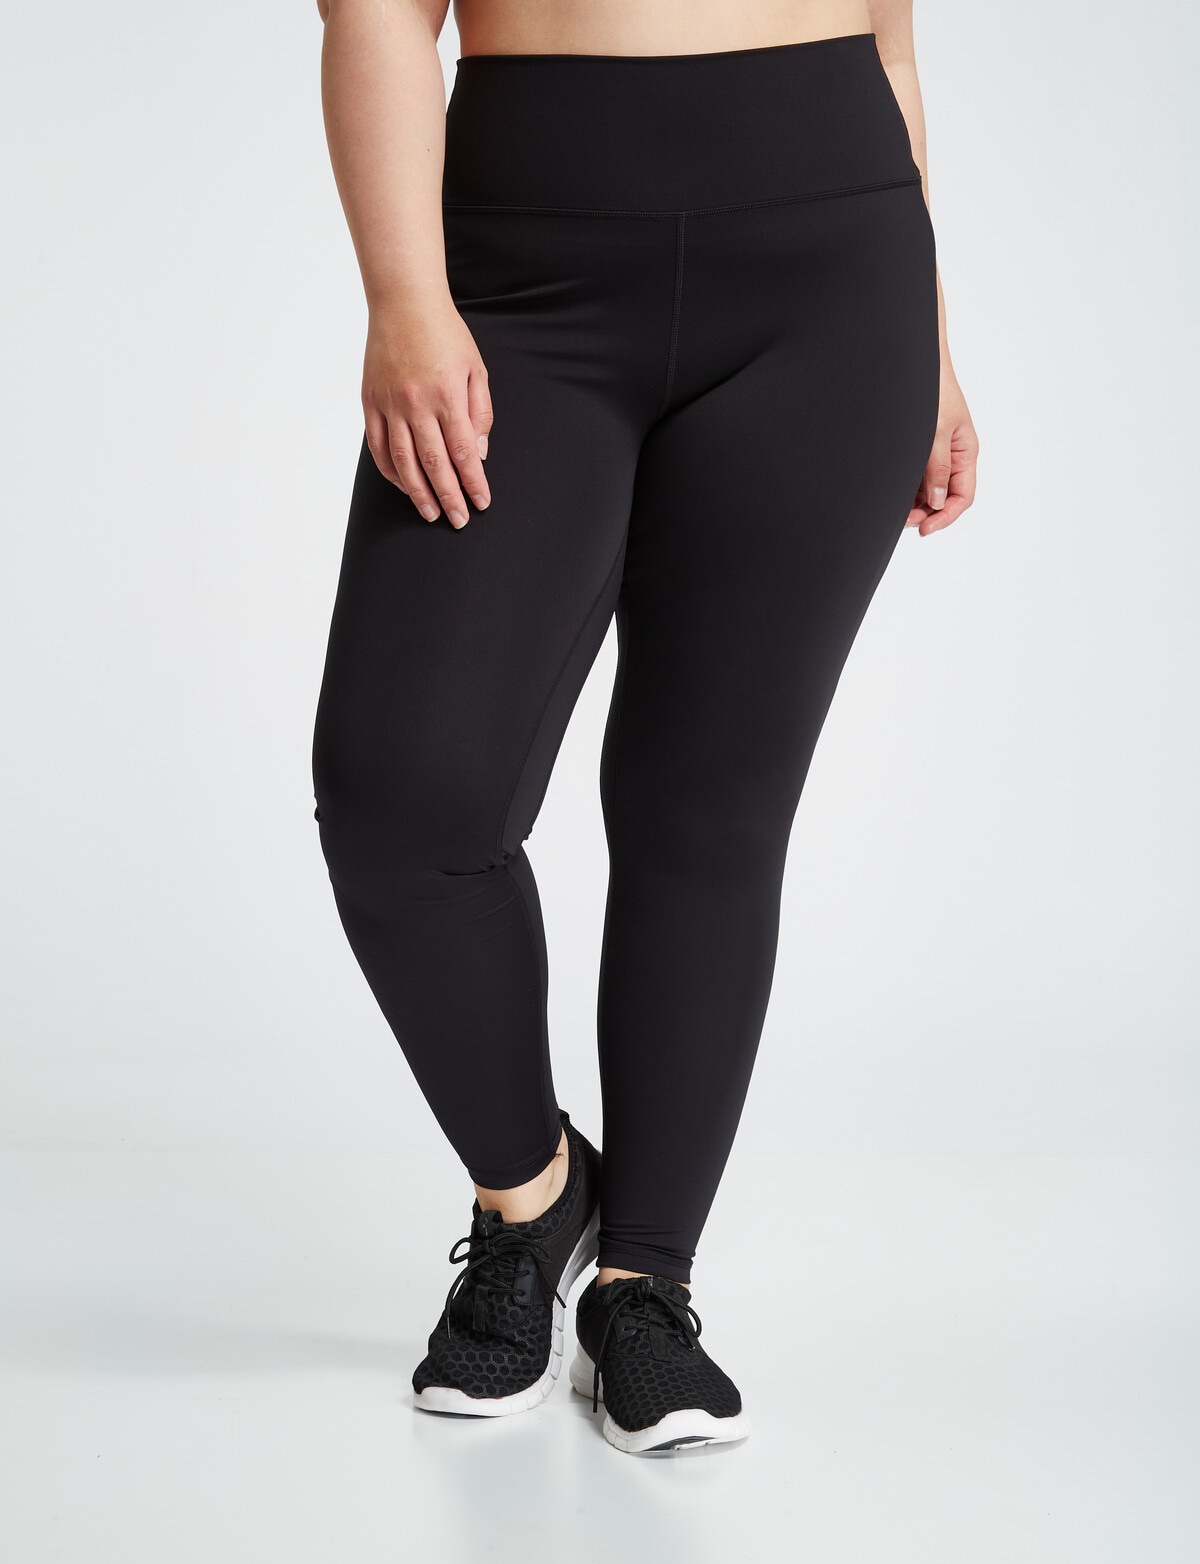 Legging NZ Levity Black – Moda Fitness